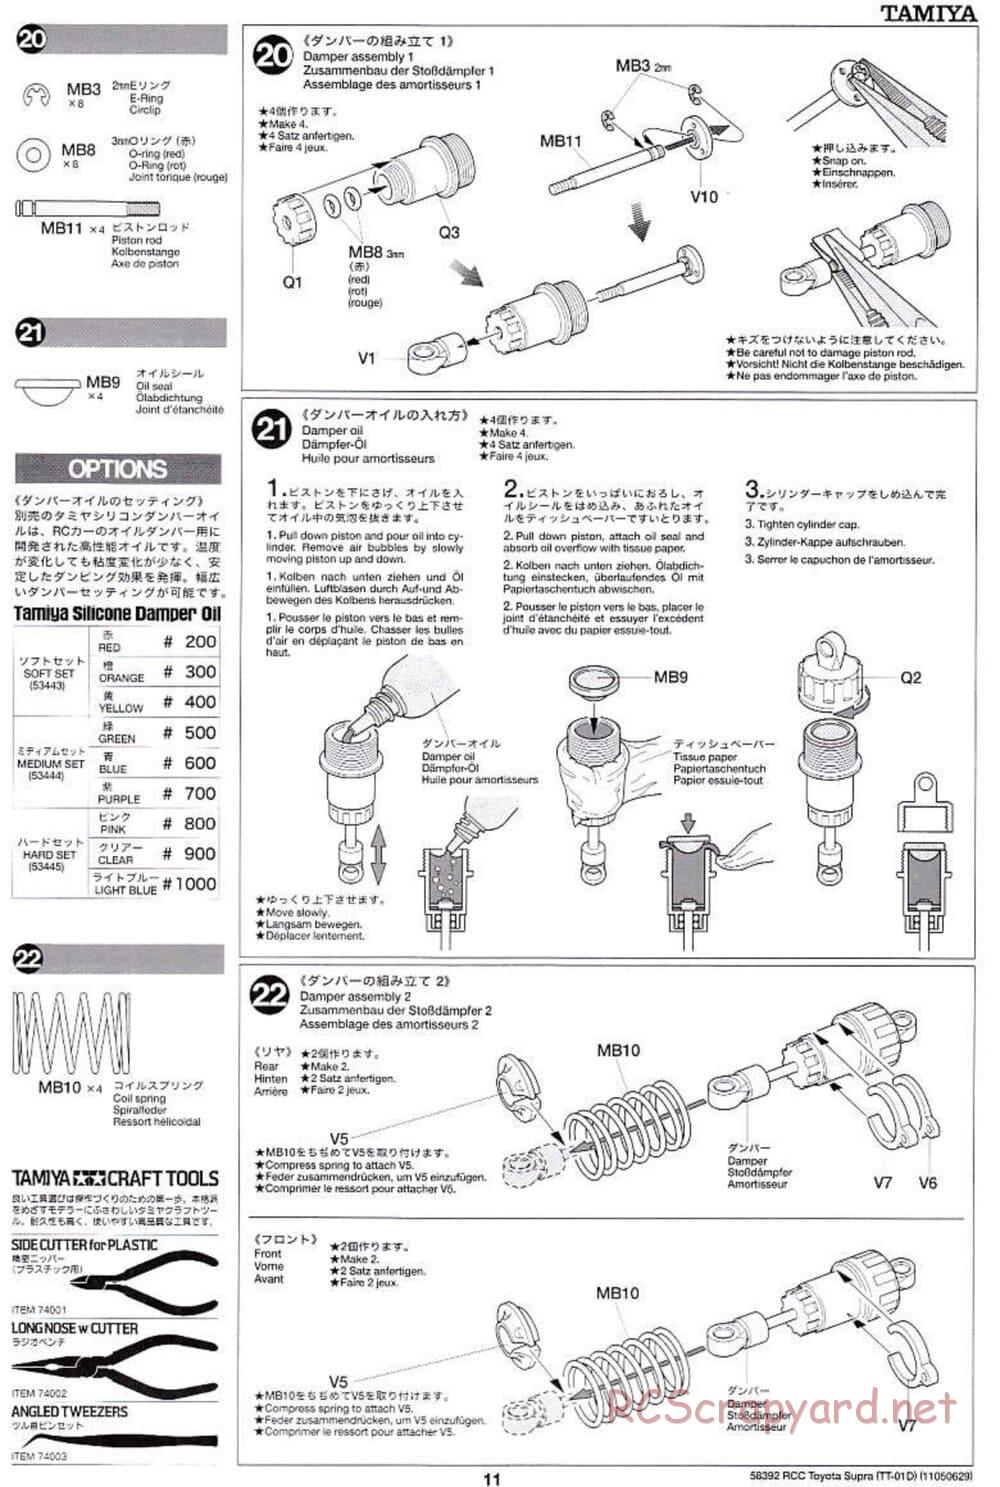 Tamiya - Toyota Supra - Drift Spec - TT-01D Chassis - Manual - Page 11